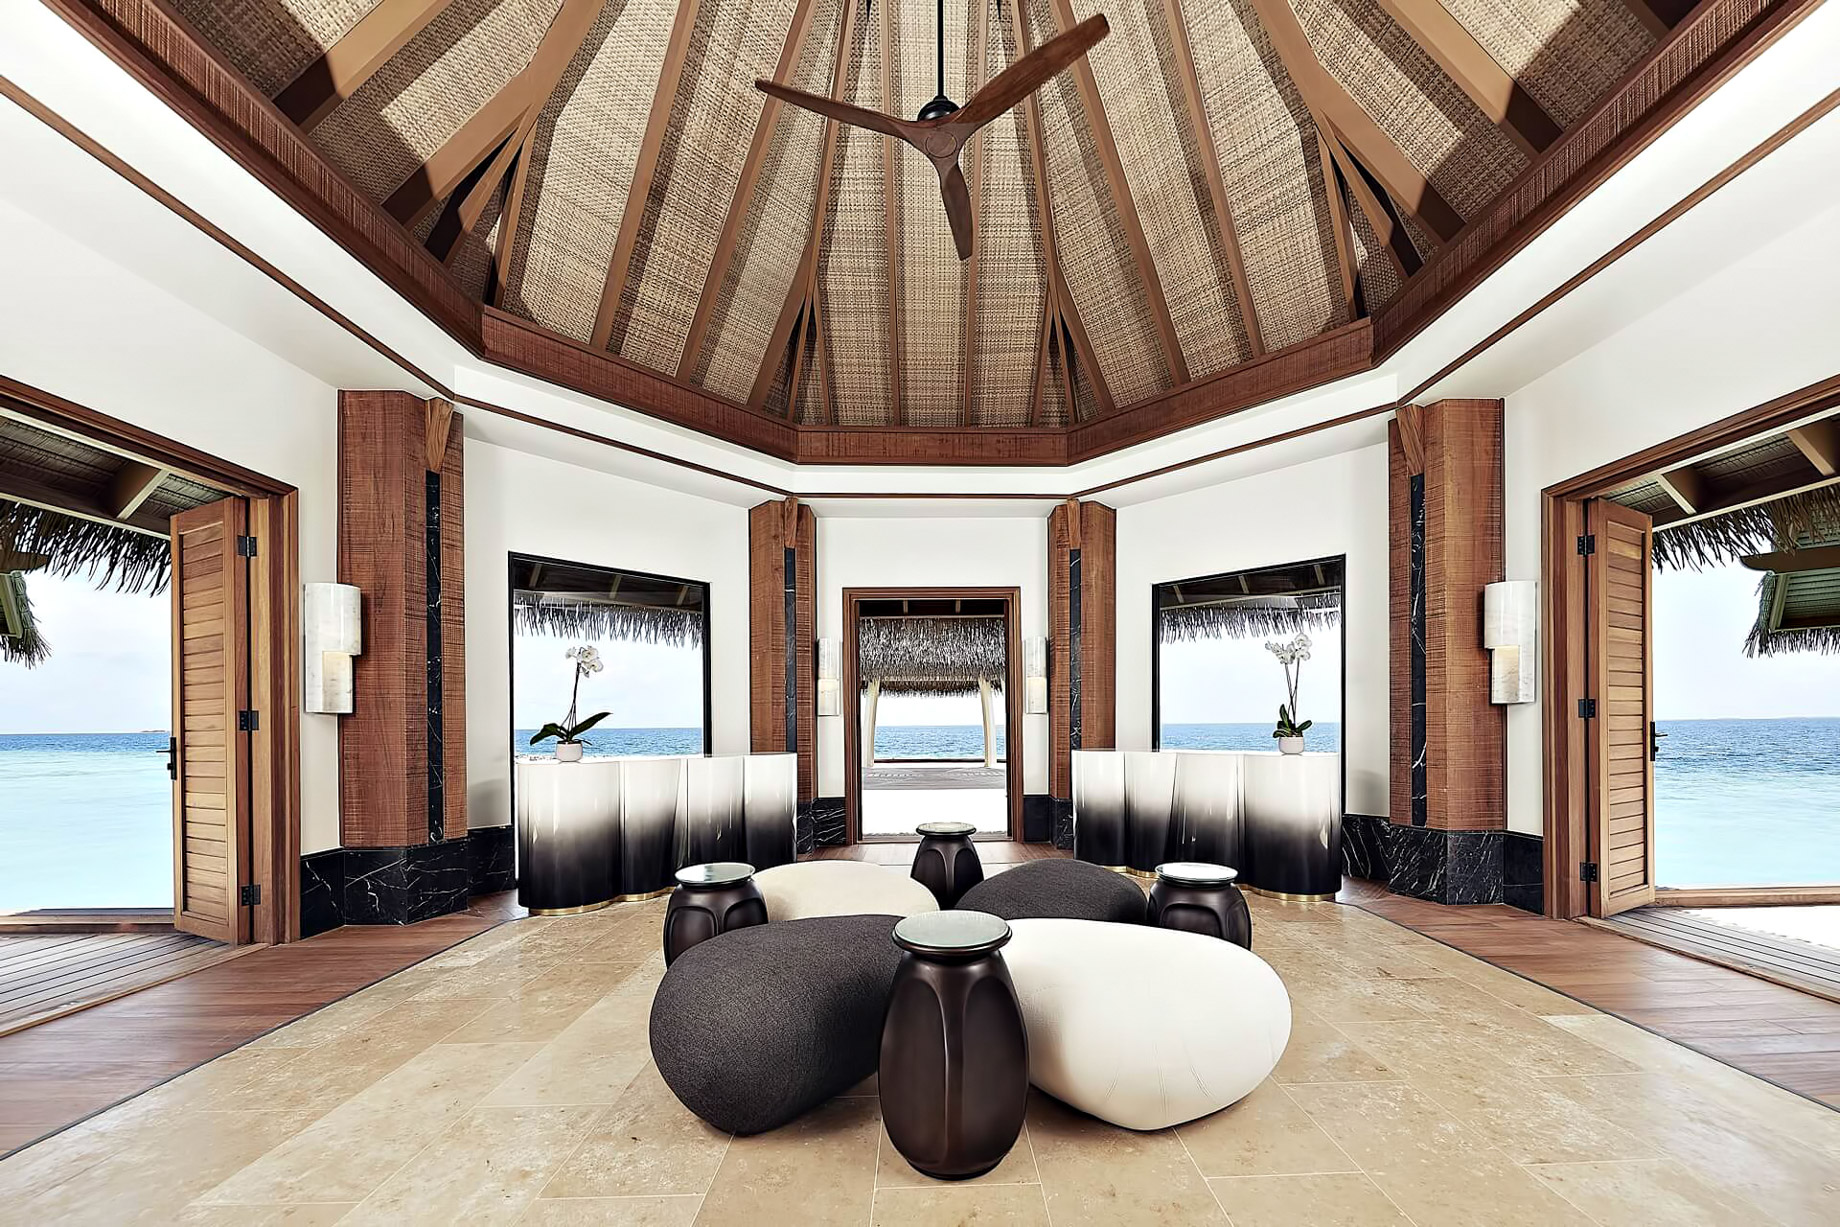 Waldorf Astoria Maldives Ithaafushi Resort - Ithaafushi Island, Maldives - Spa and Wellness Center Reception